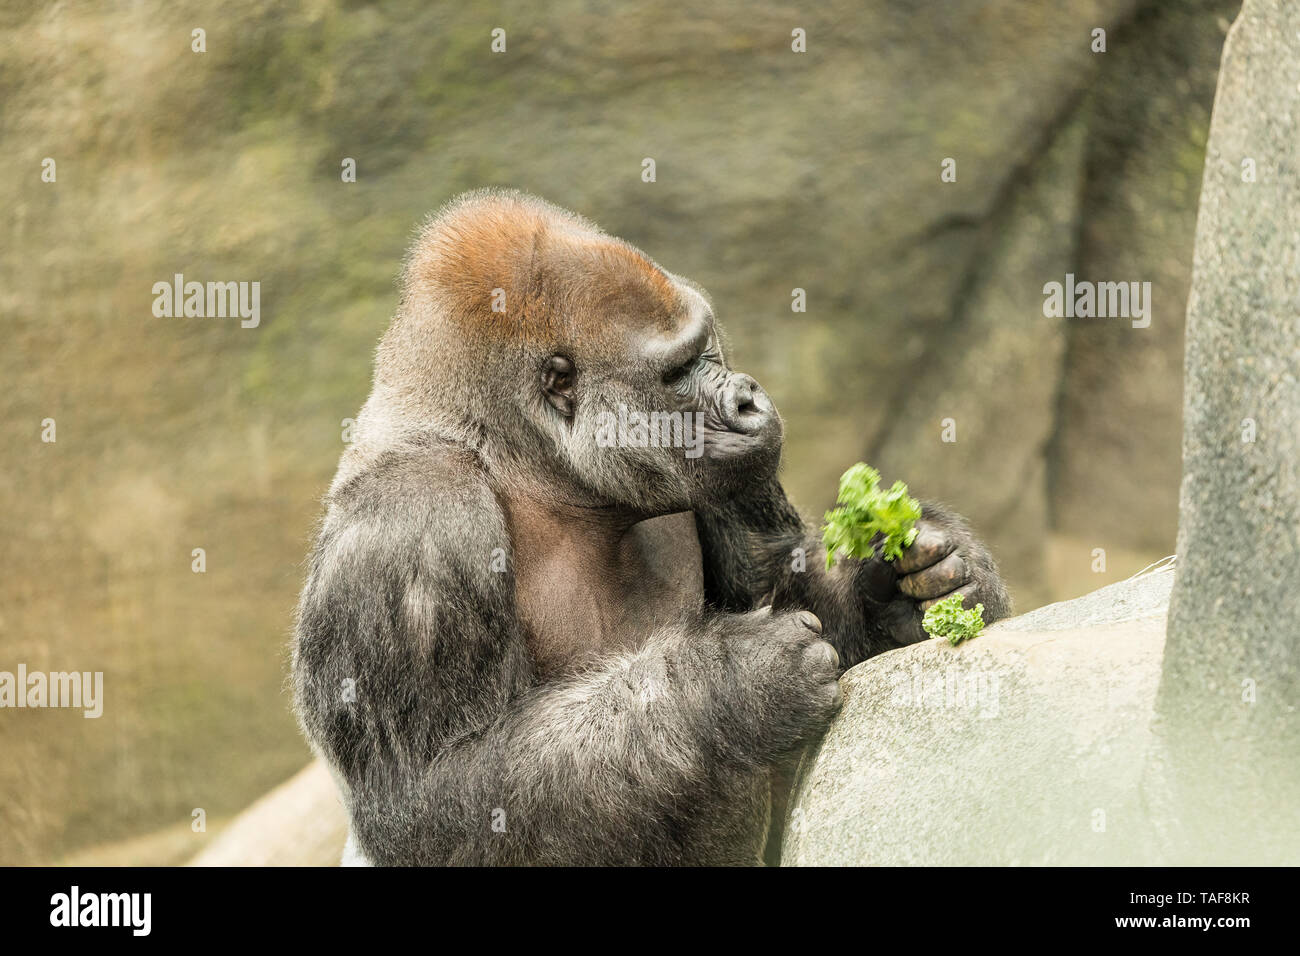 A gorilla holding onto some lettuce to eat. Stock Photo